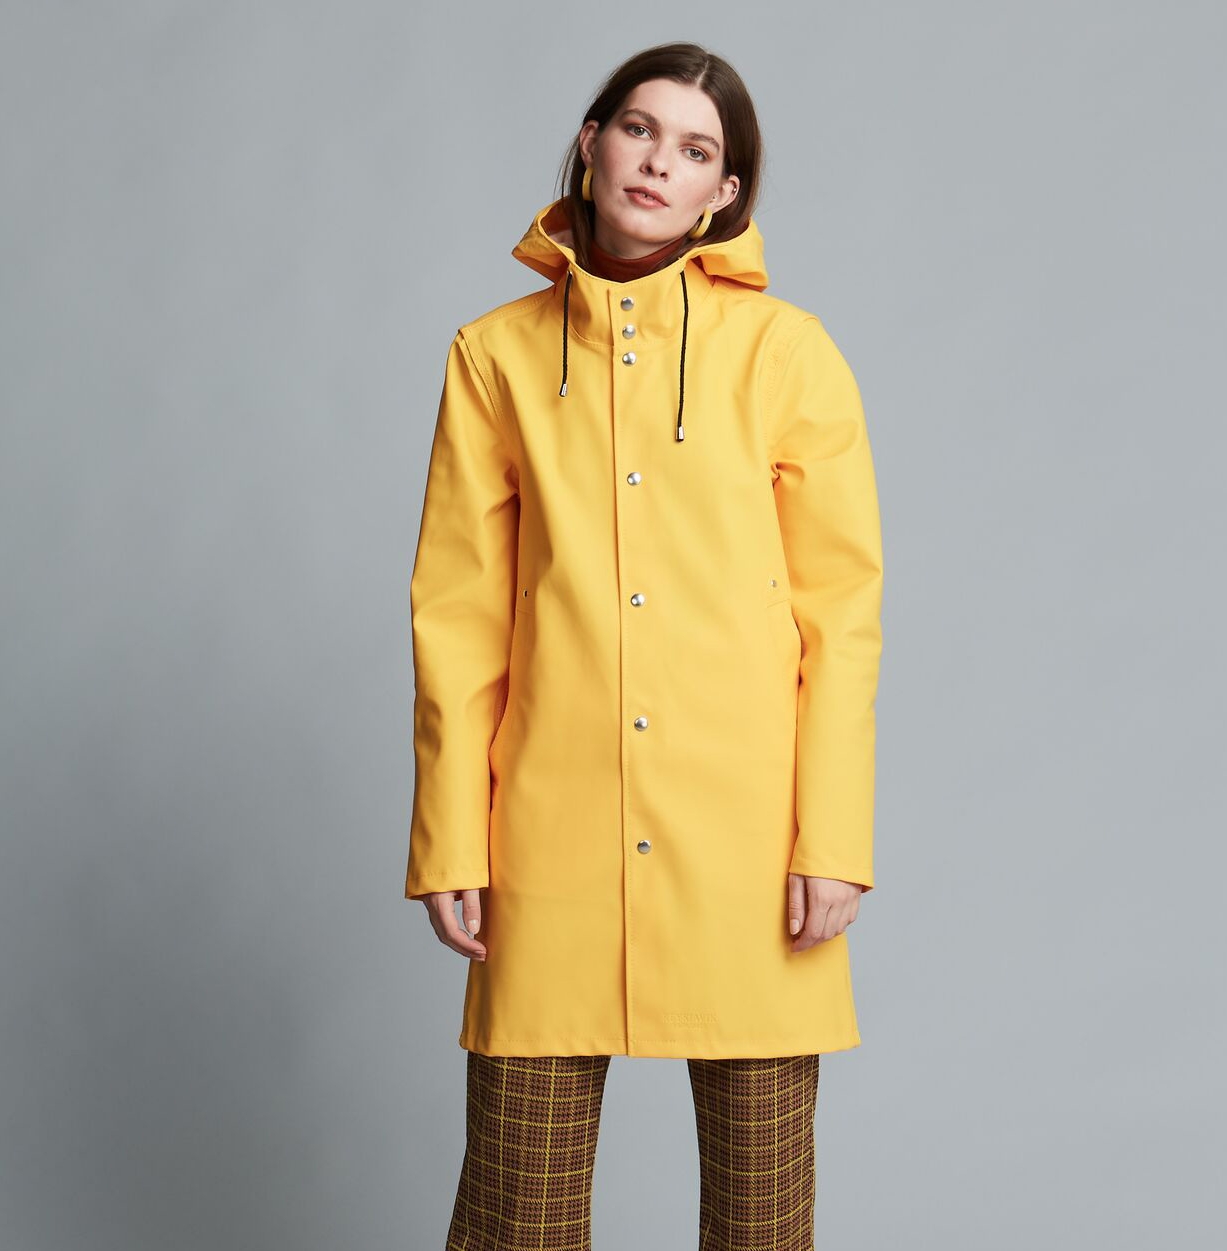 Classic yellow — Reykjavik Raincoats